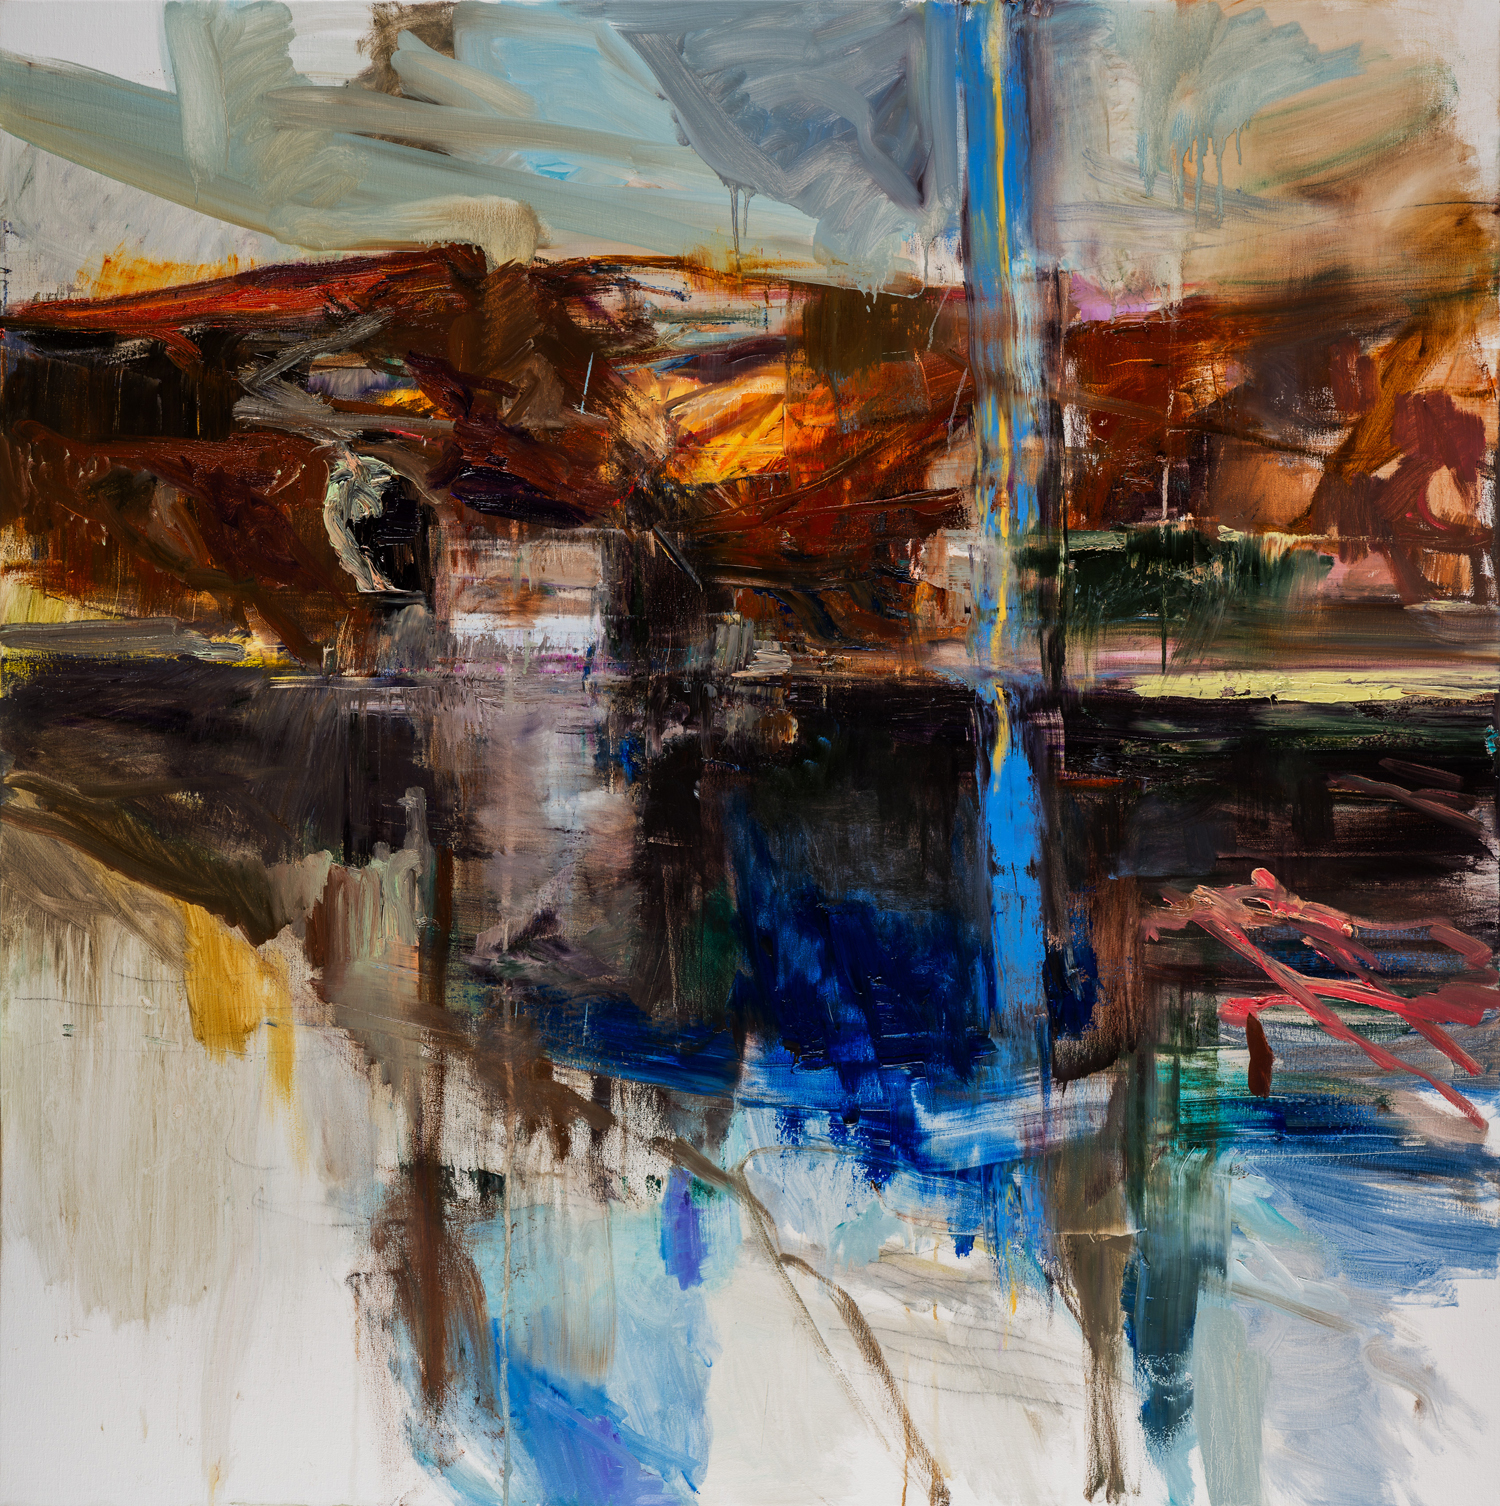 L'éclair lac, 2020 | Oil on canvas | 59 x 59 inches